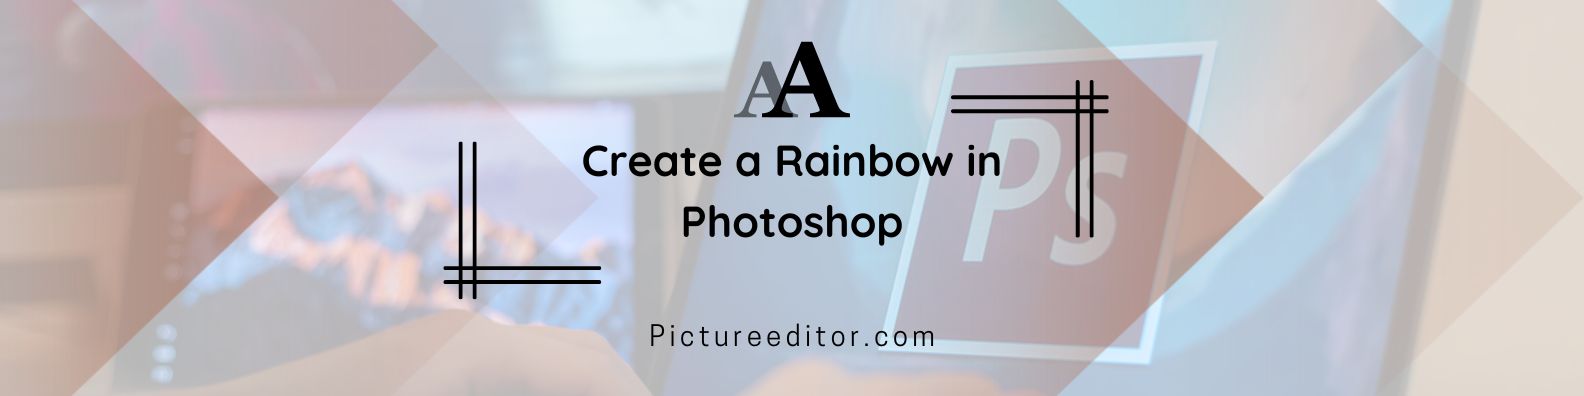 Create a Rainbow in Photoshop